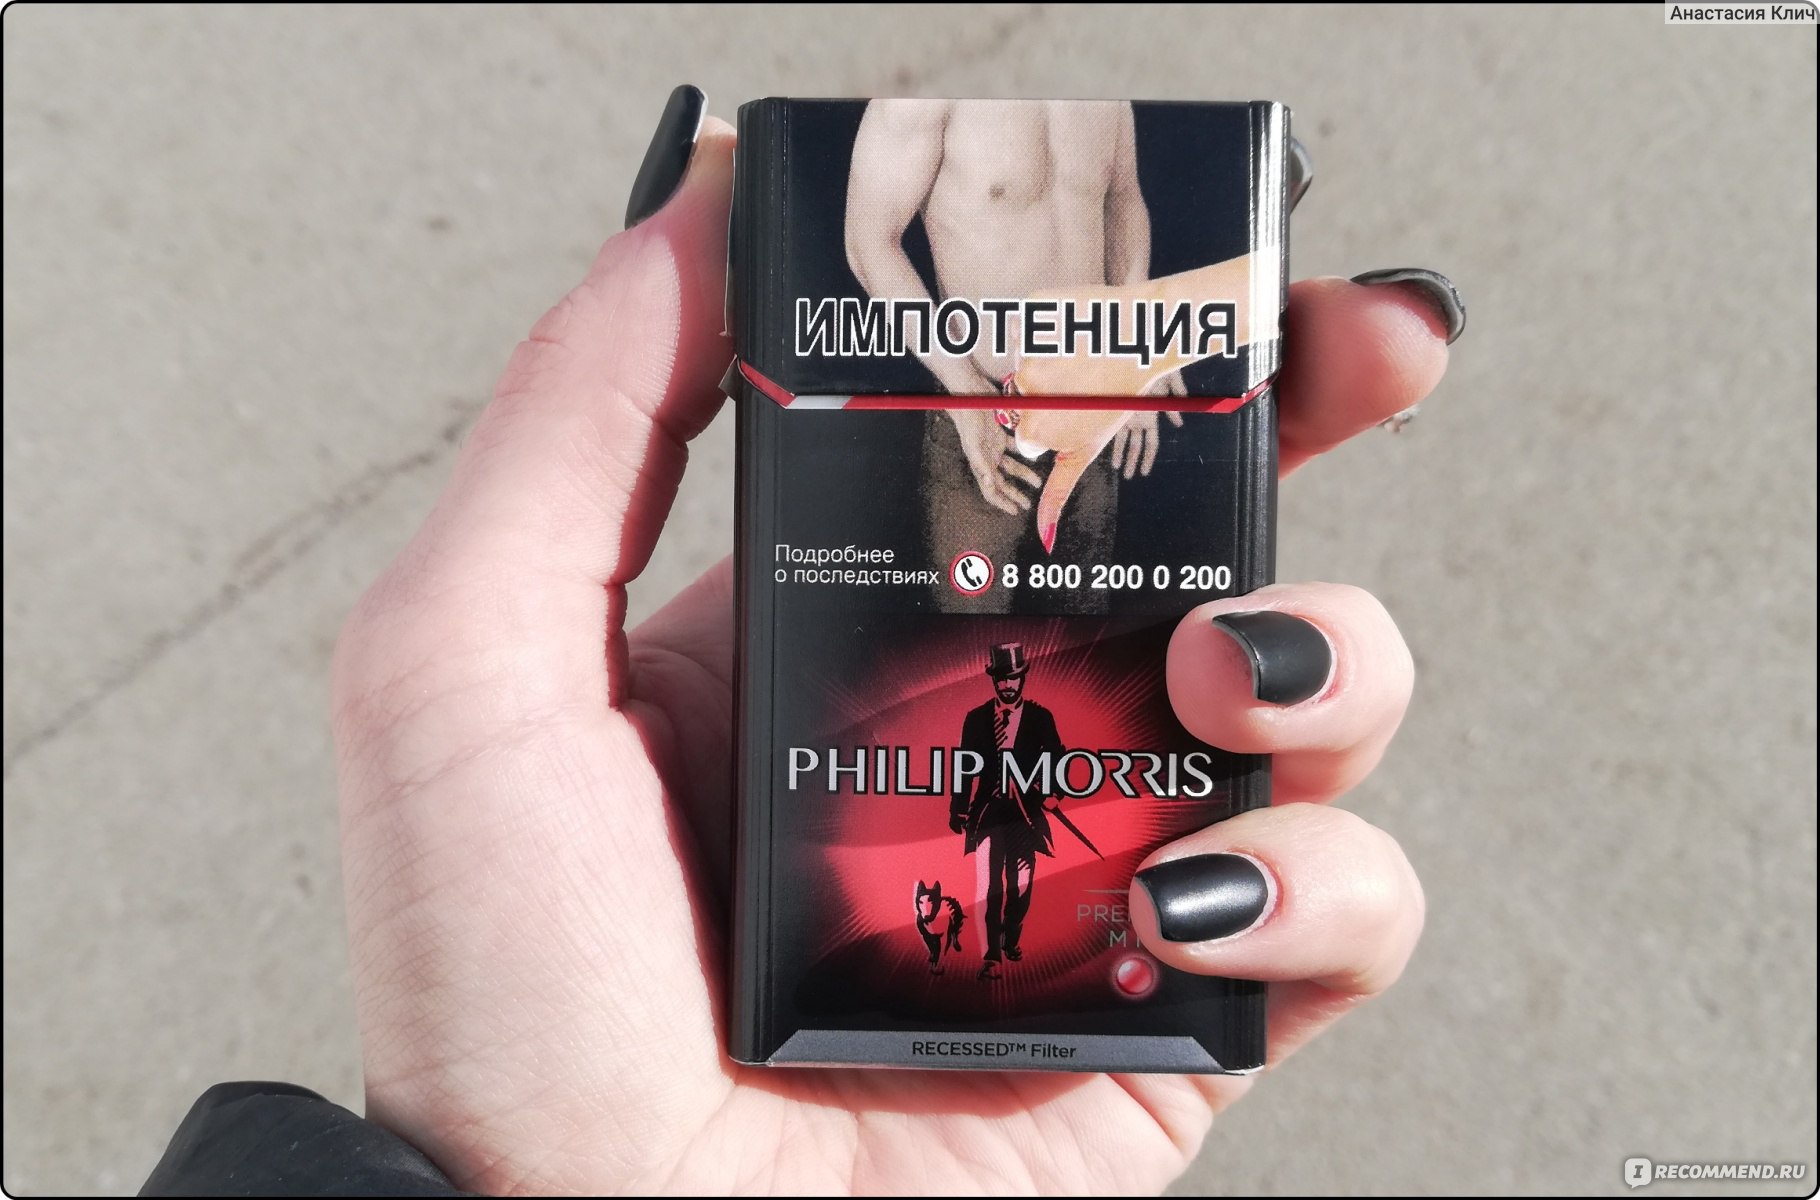 Филип морис микс. Сигареты Philip Morris exotic. Филип Морис премиум микс. Сигареты Филип Моррис микс.